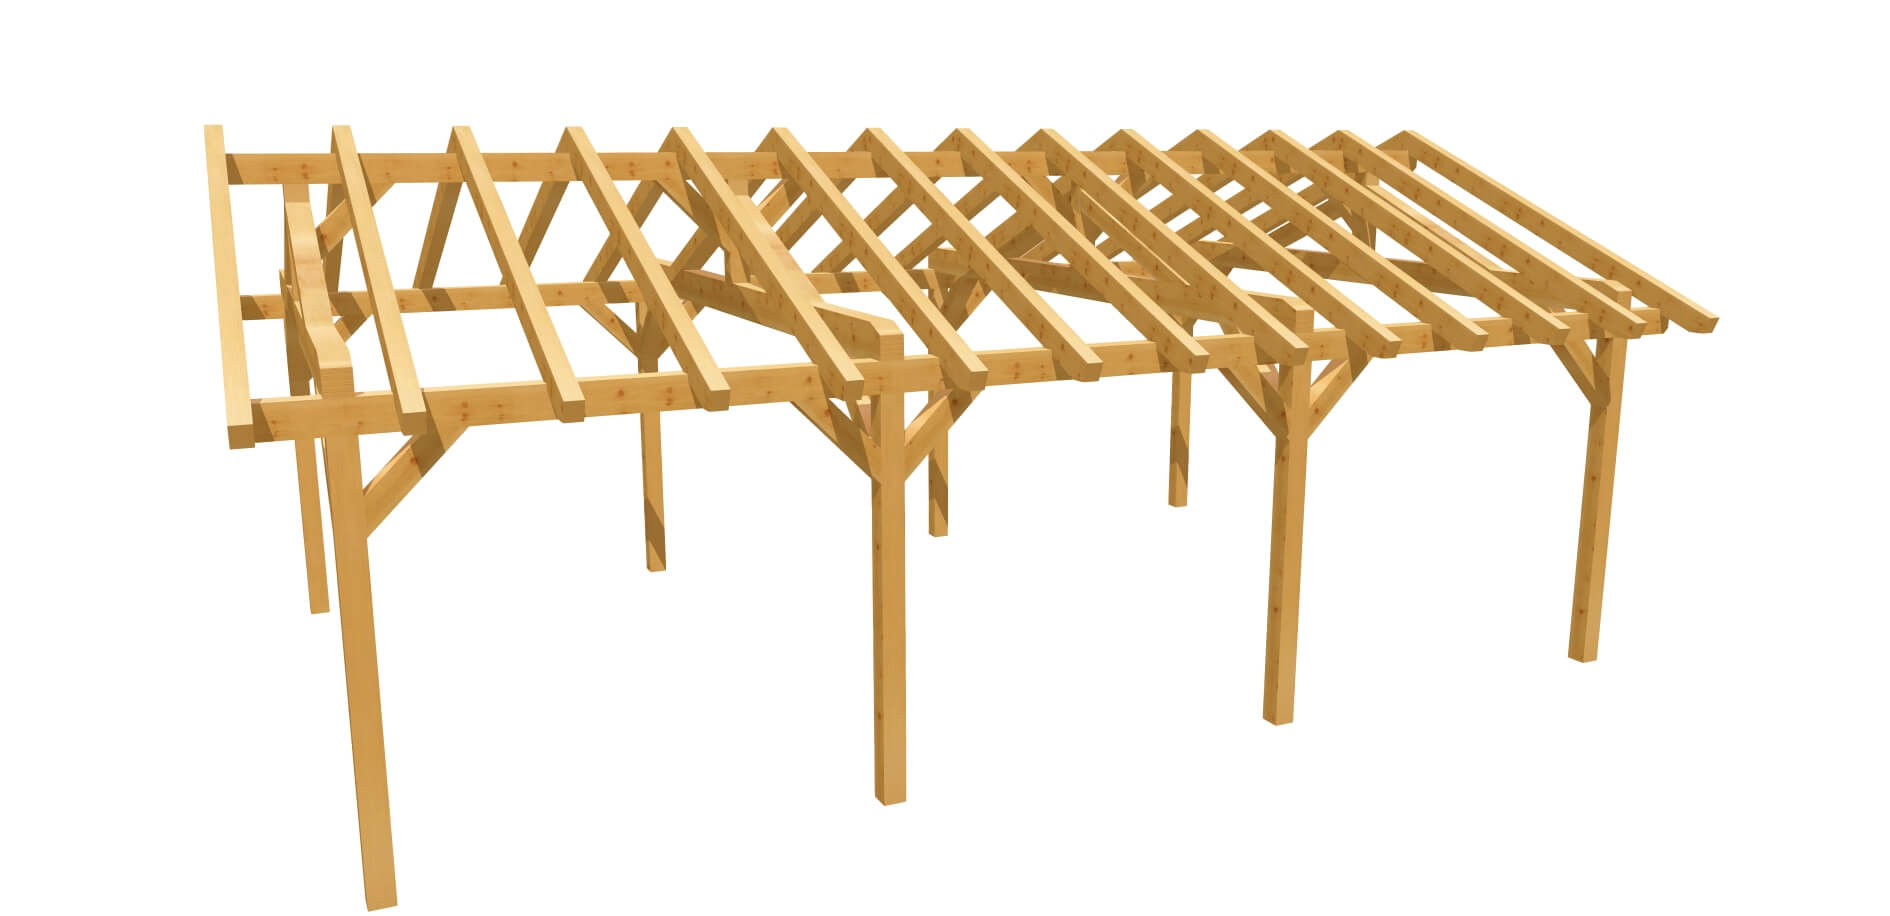 Carport aus Holz bauen